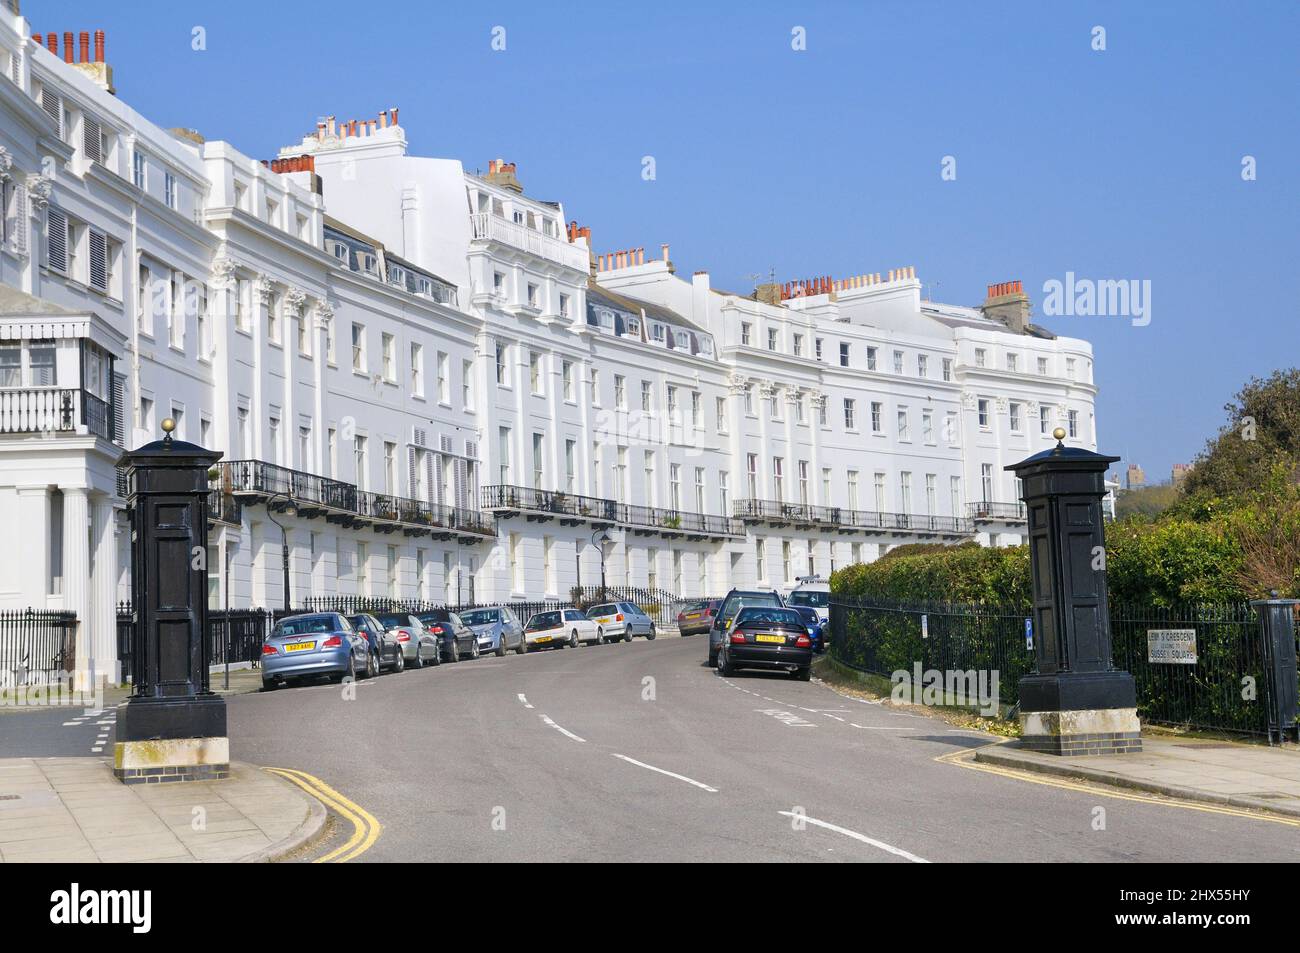 Lewes Crescent, un buen ejemplo de arquitectura regencia catalogada de grado I, Kemp Town, Brighton, East Sussex, Inglaterra, REINO UNIDO Foto de stock